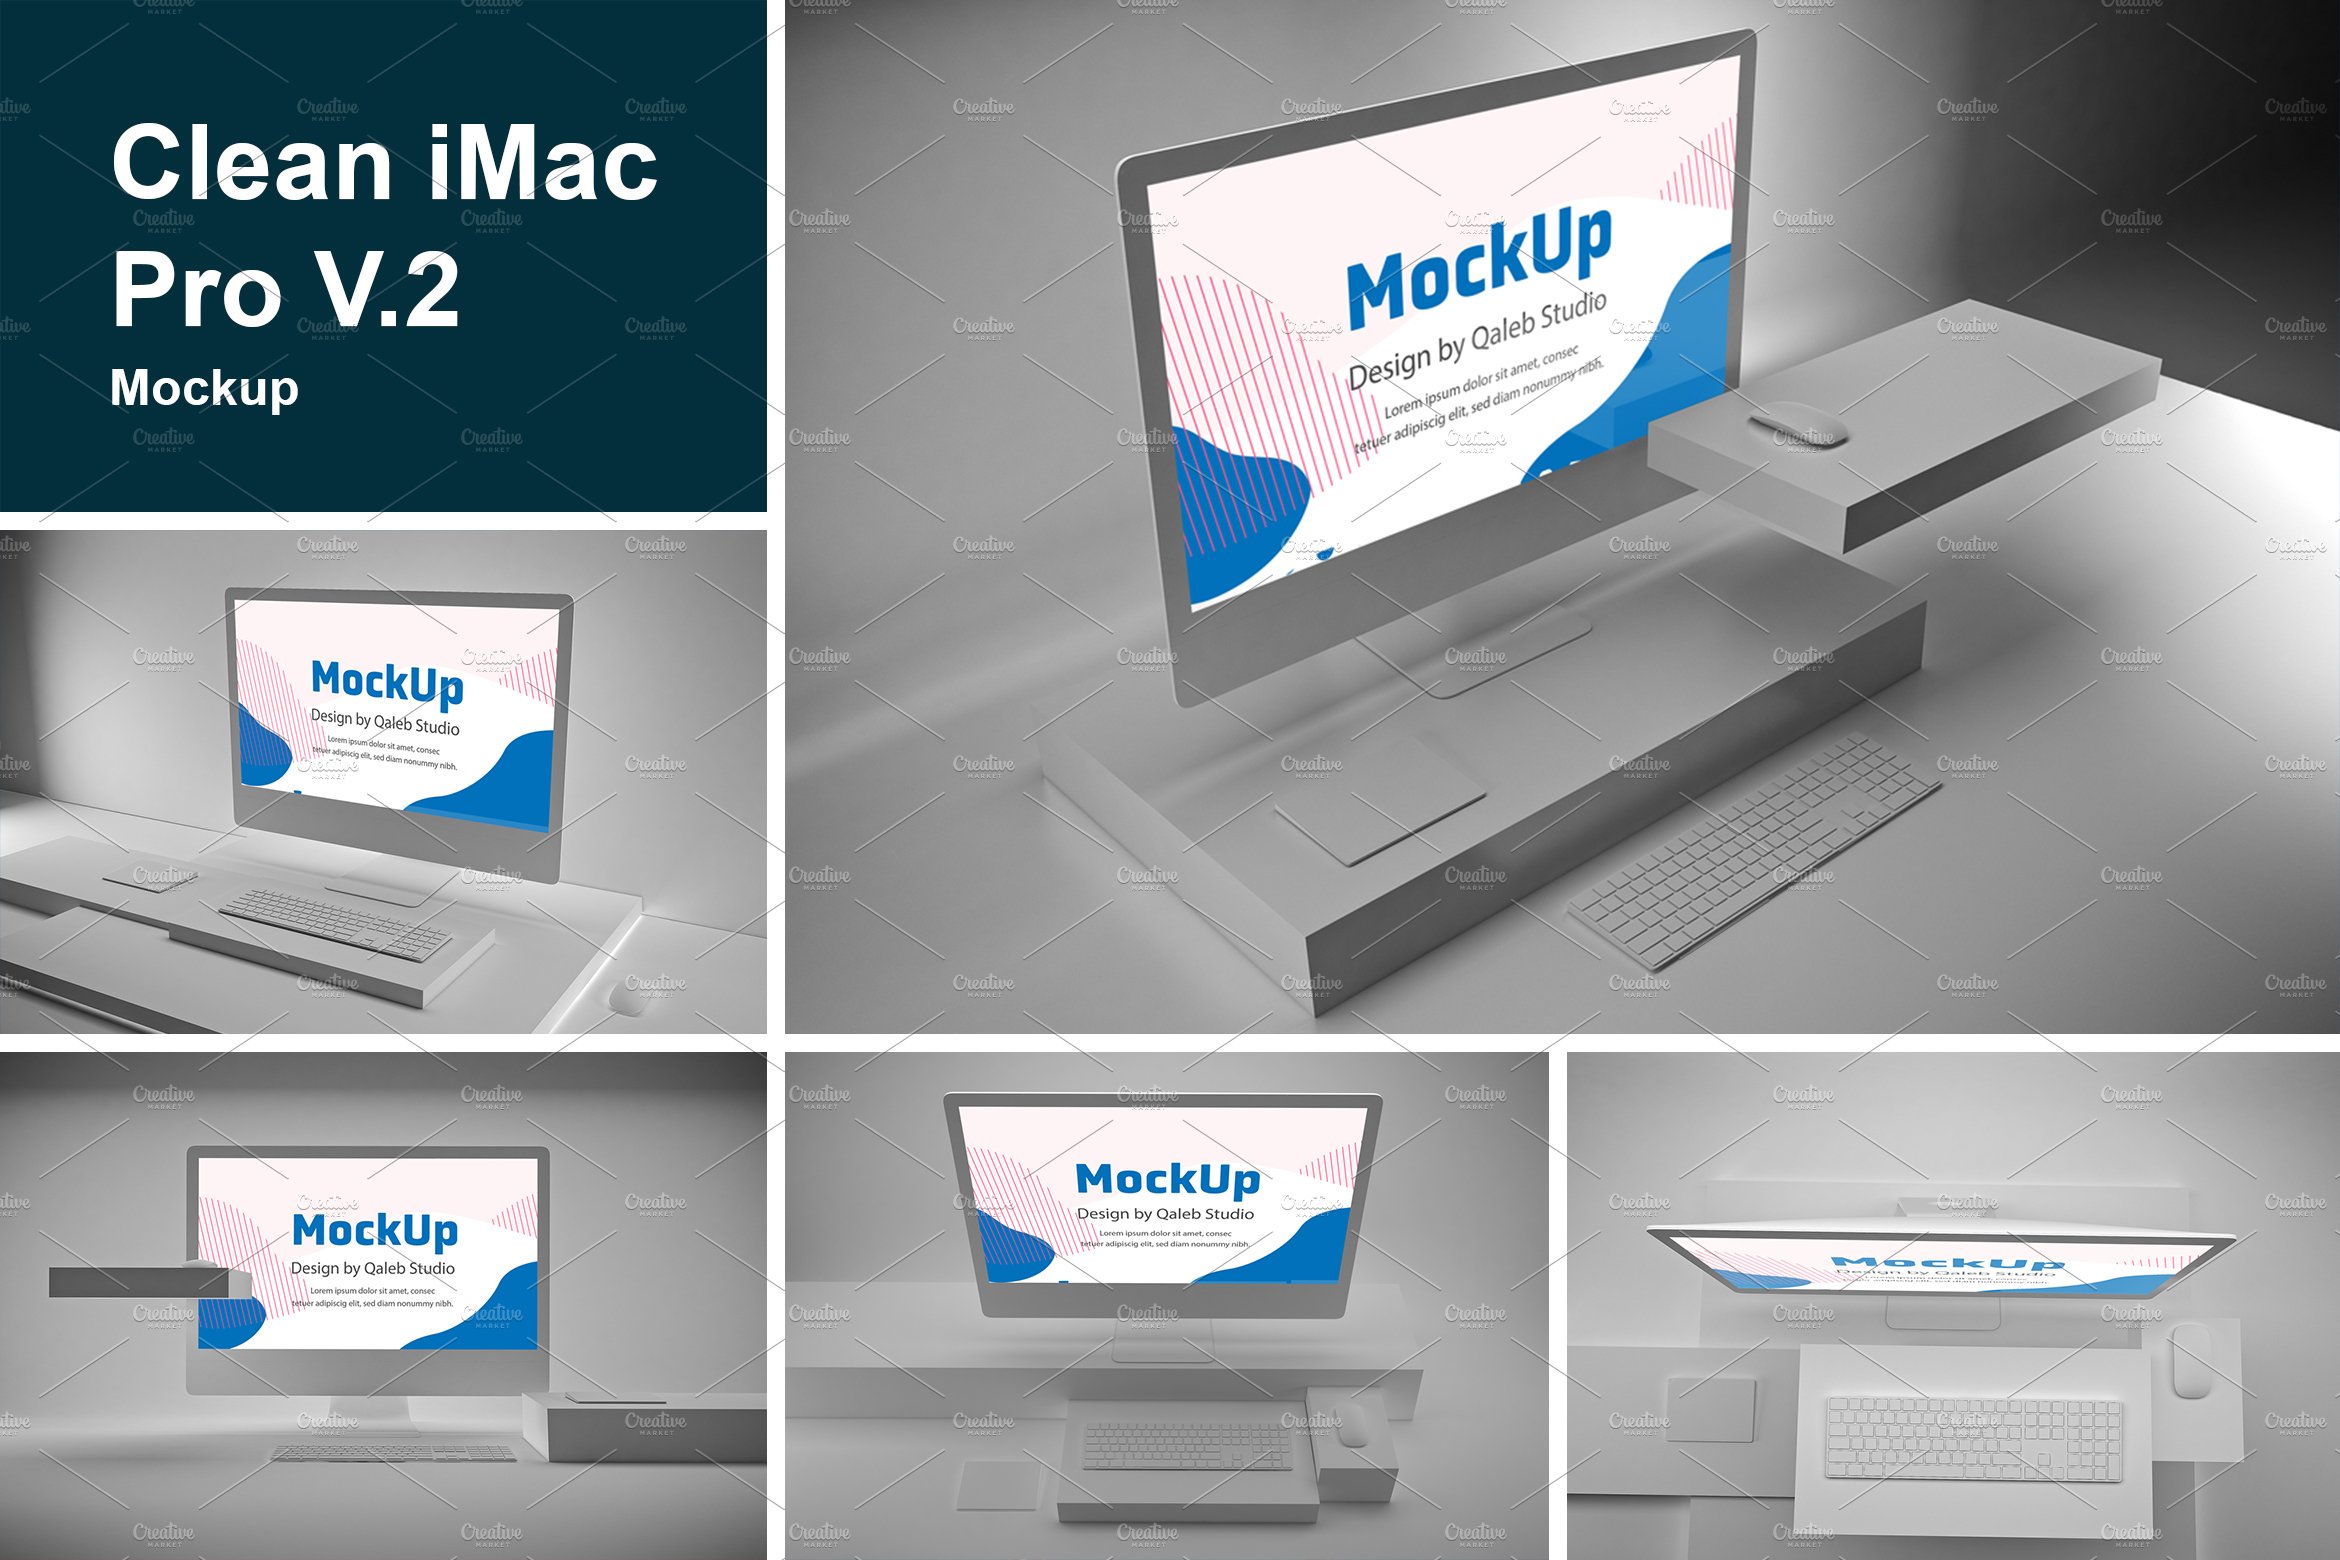 Clean iMac Pro V.2 cover image.